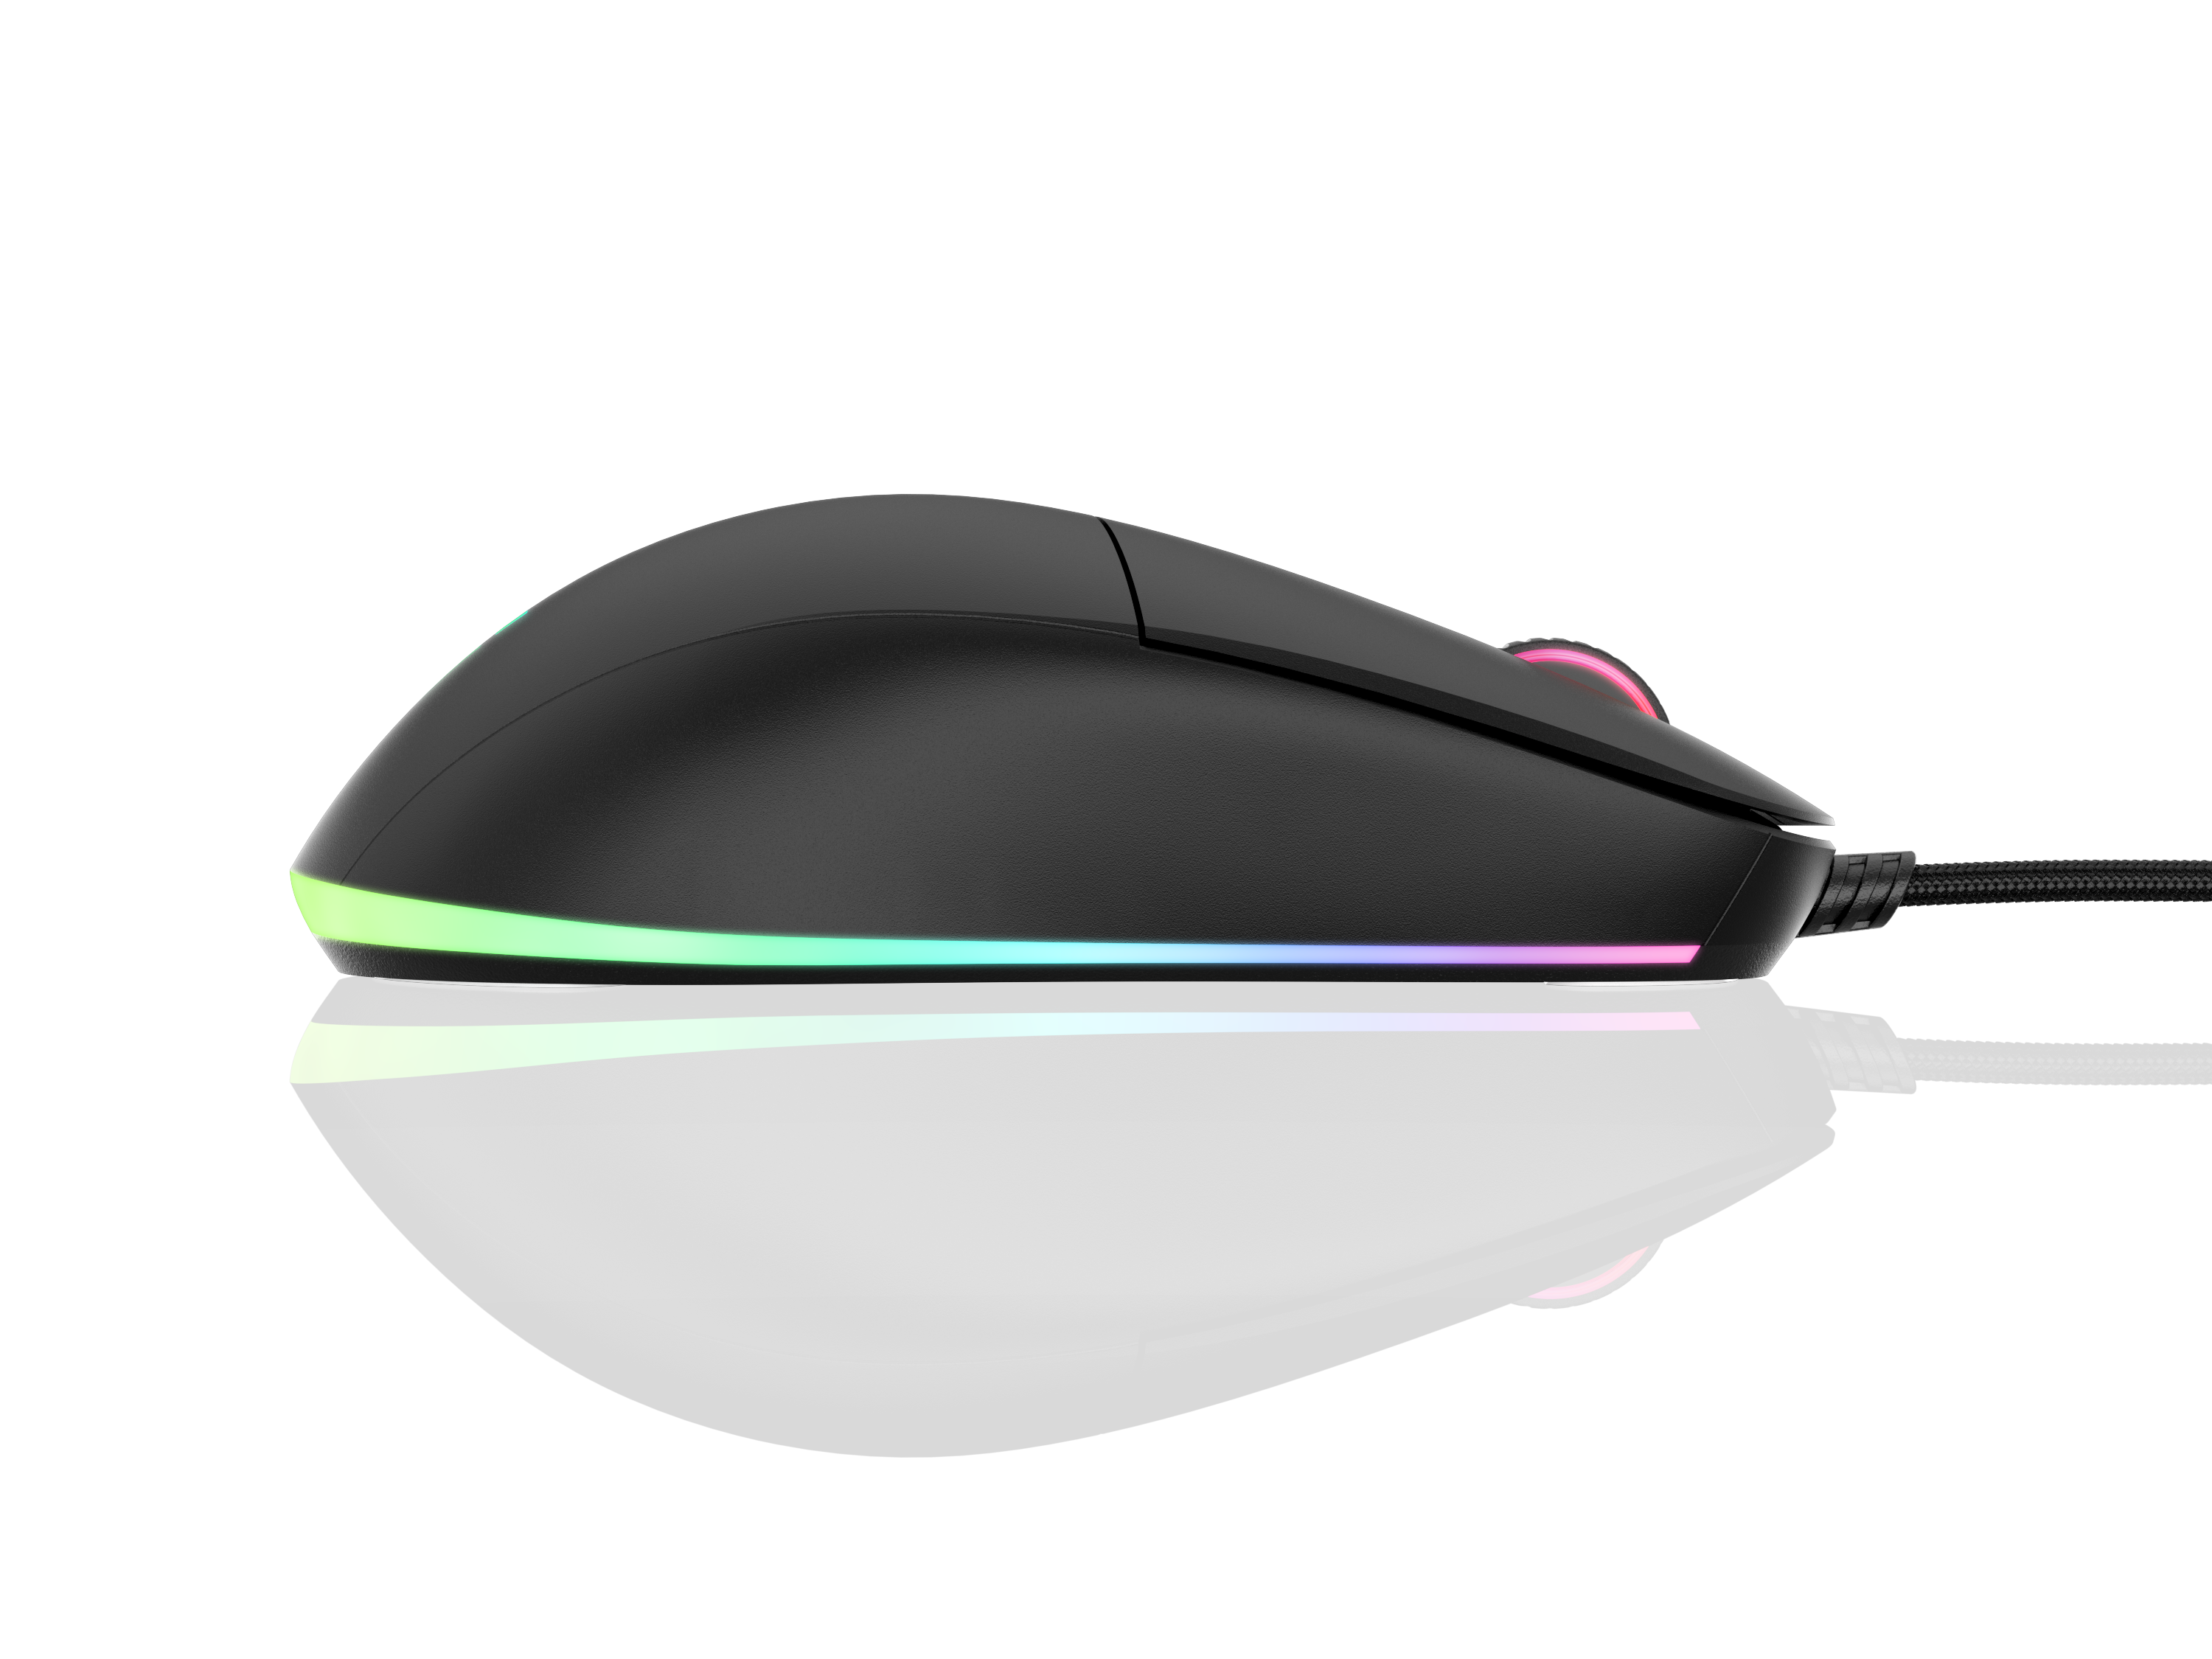 endgame-gear - XM1 RGB Gaming Mouse - Black